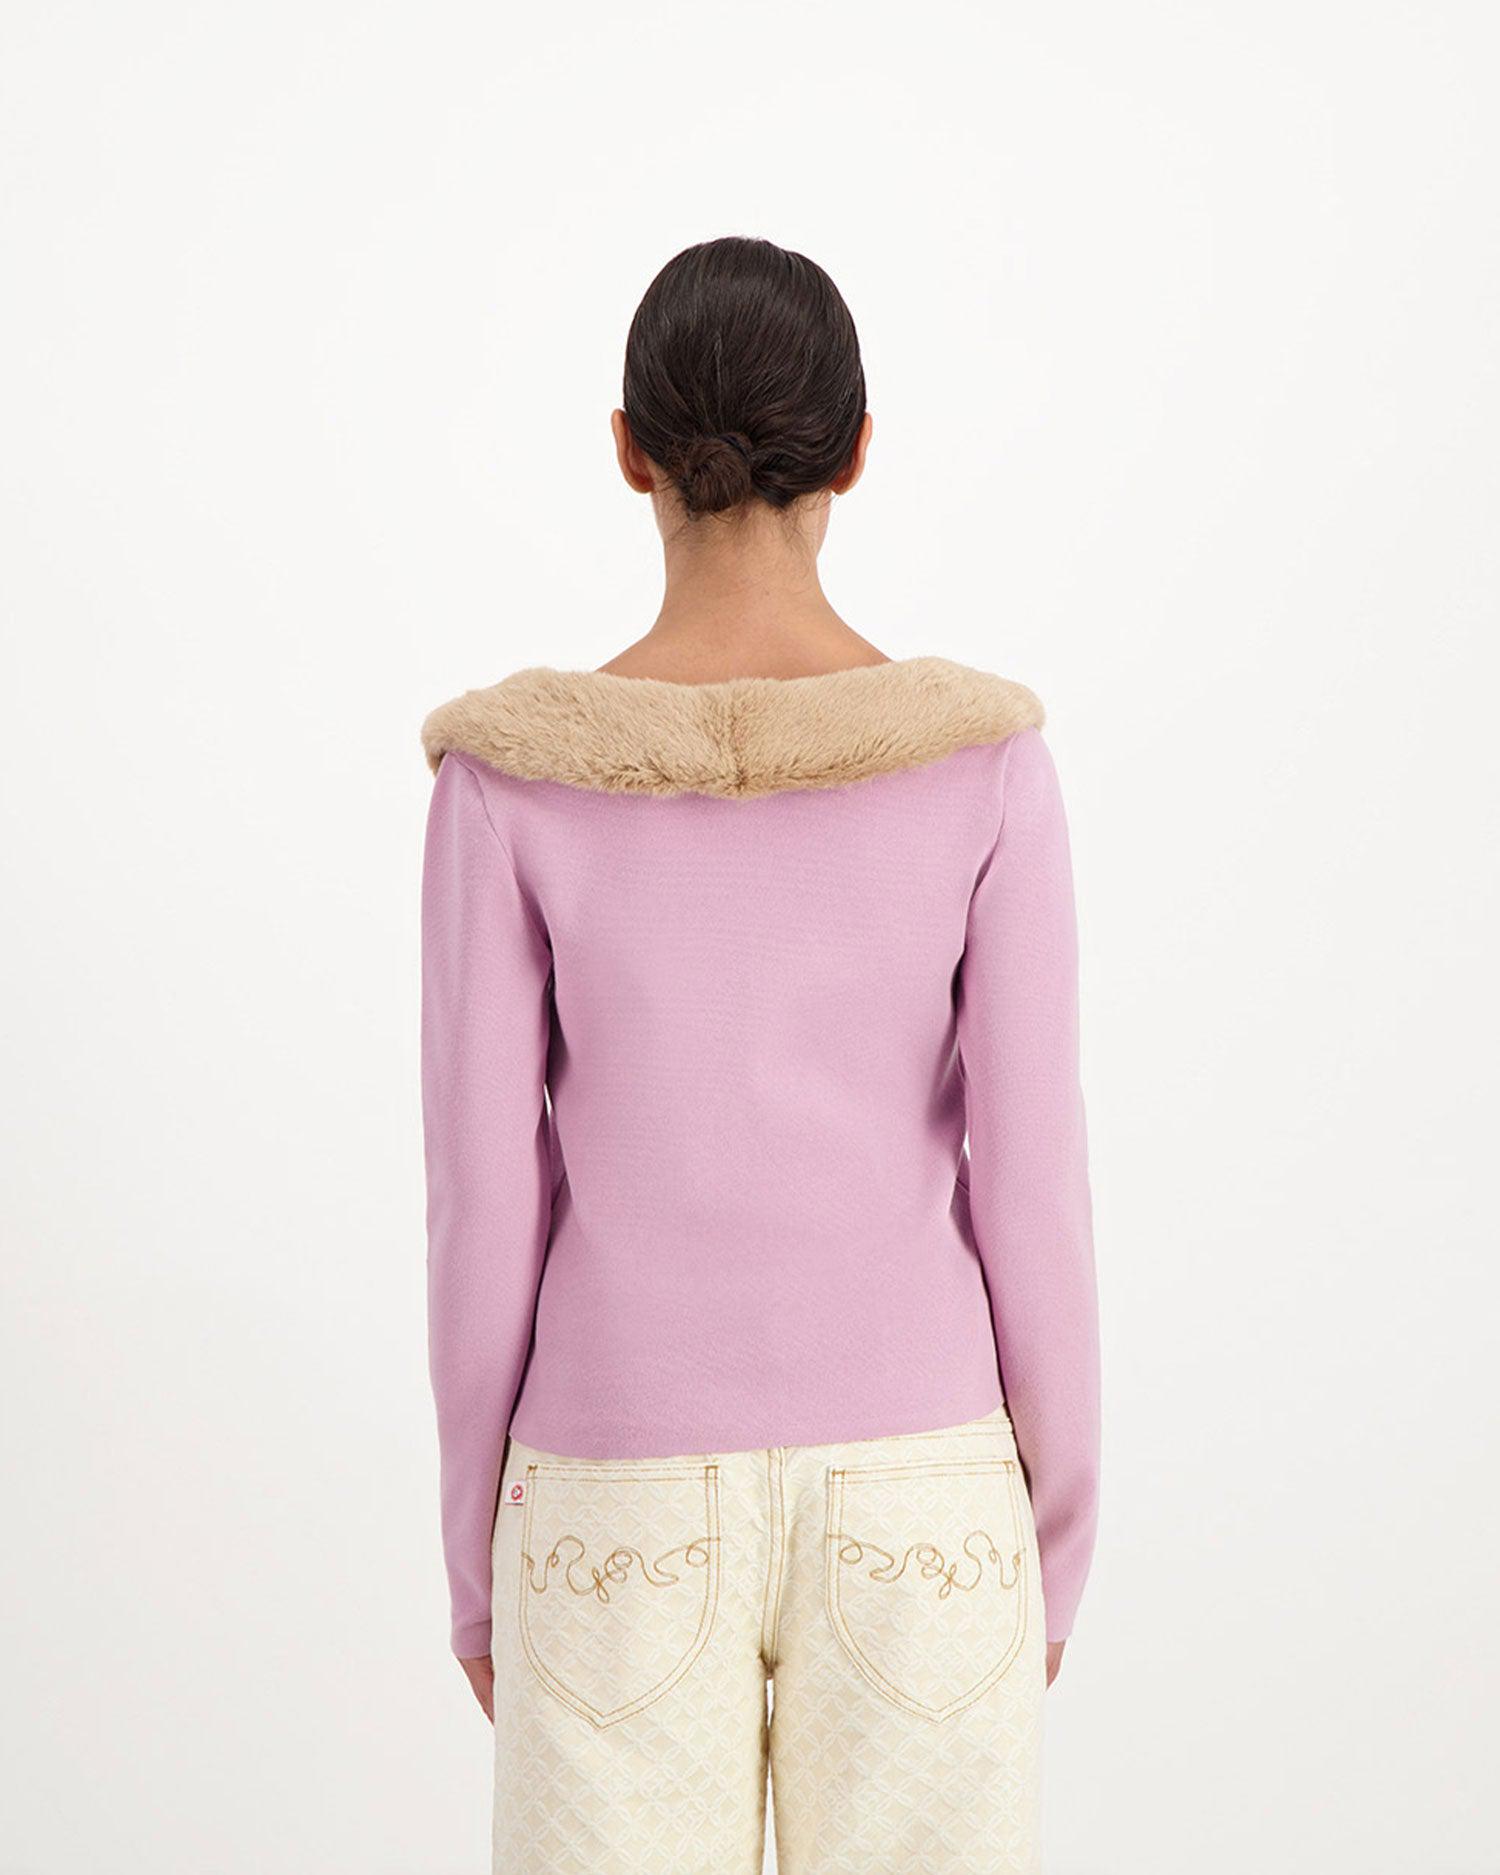 Maglia Cardigan - Sweaters - Blumarine - Elevastor